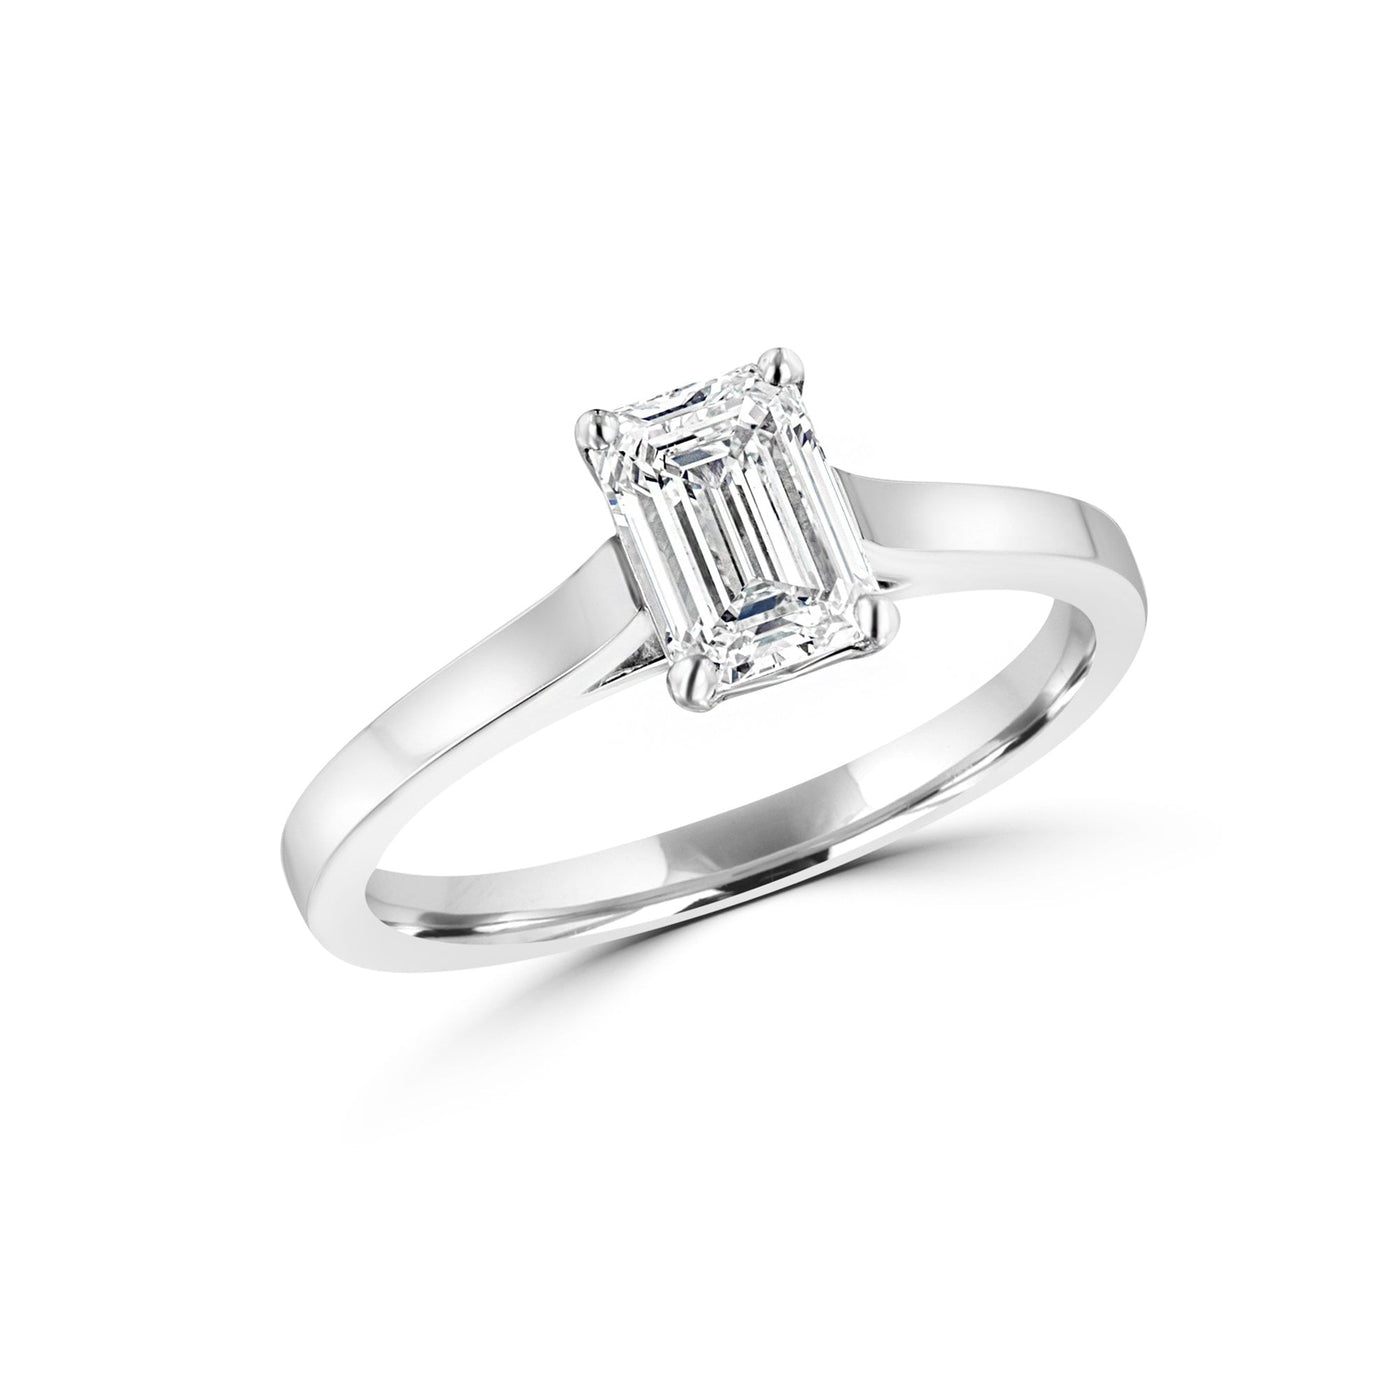 Emerald Cut Solitaire Diamond Ring, White Gold